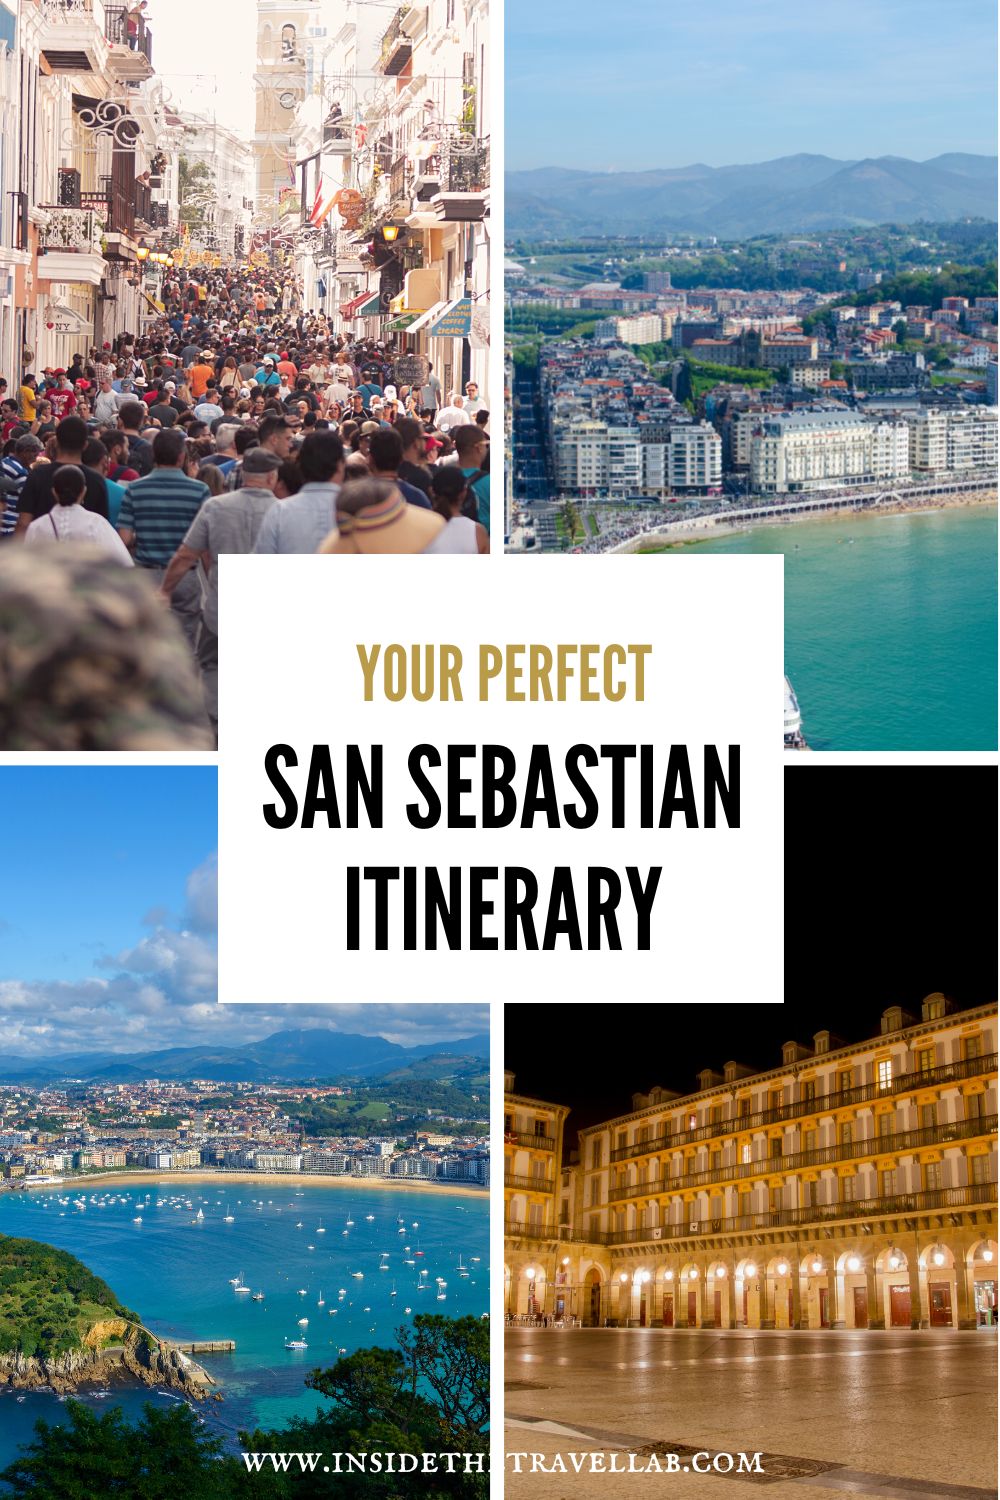 San Sebastian itinerary cover image